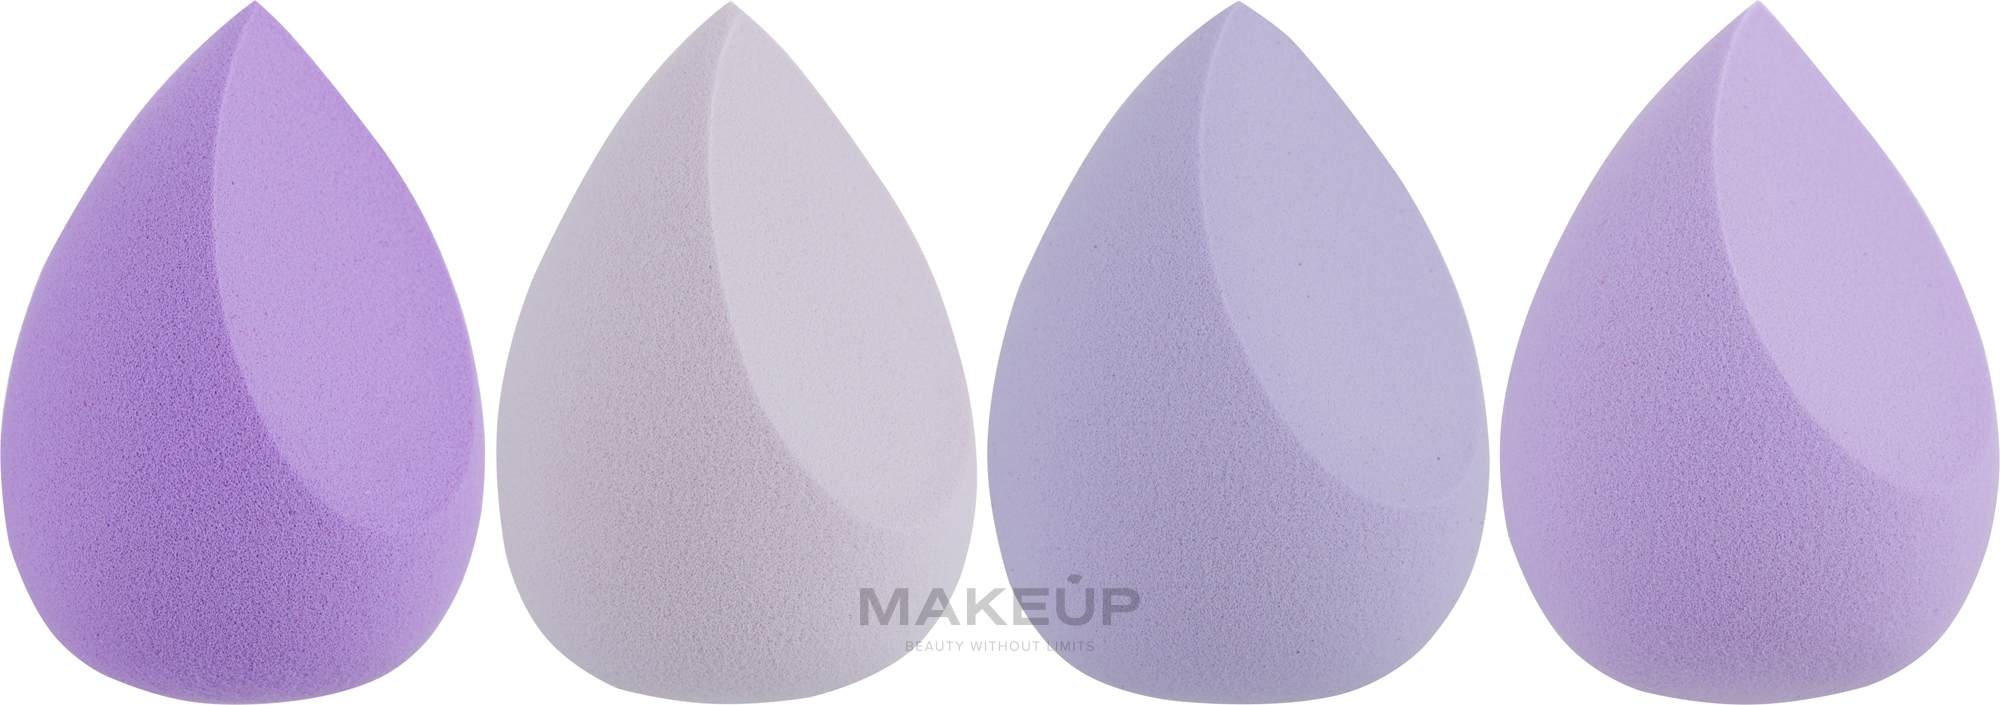 Набор спонжей для макияжа 4 в 1, Pf-297, фиолетовые - Puffic Fashion — фото 4шт